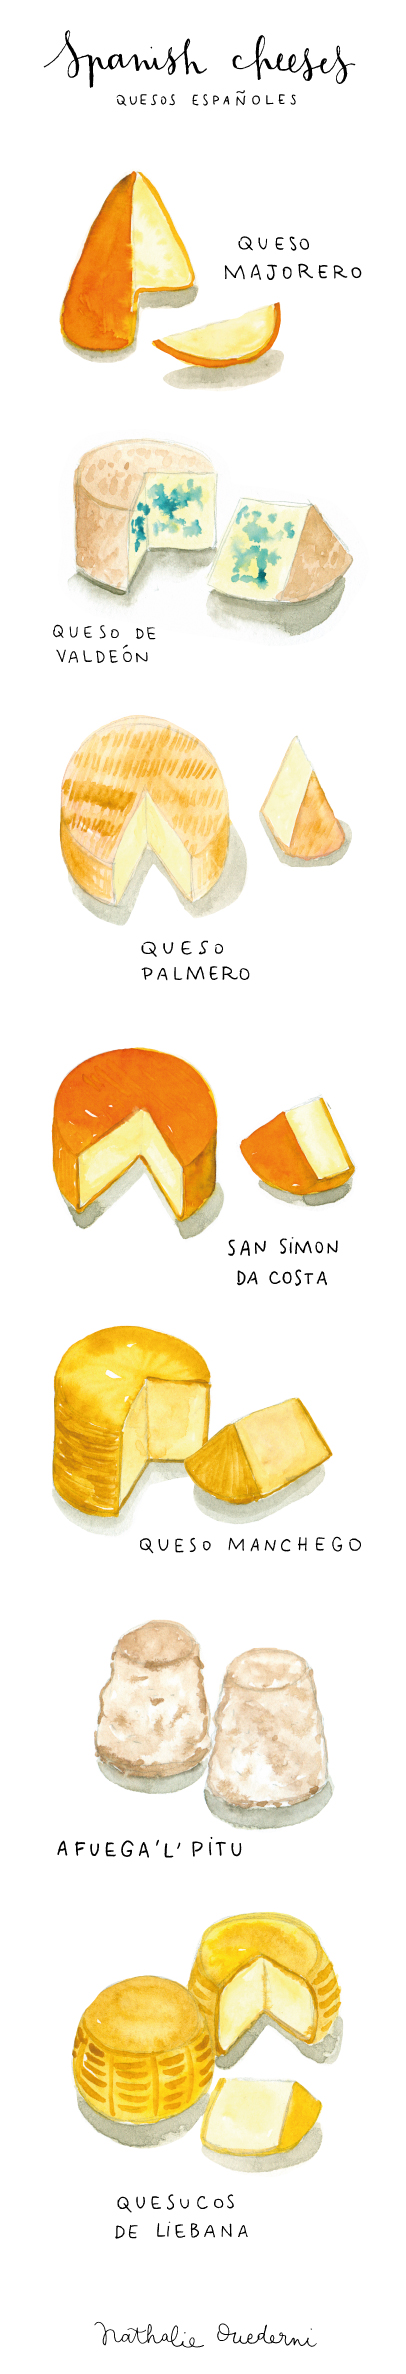 spanish-cheeses-watercolor-food-illustration-long.jpg